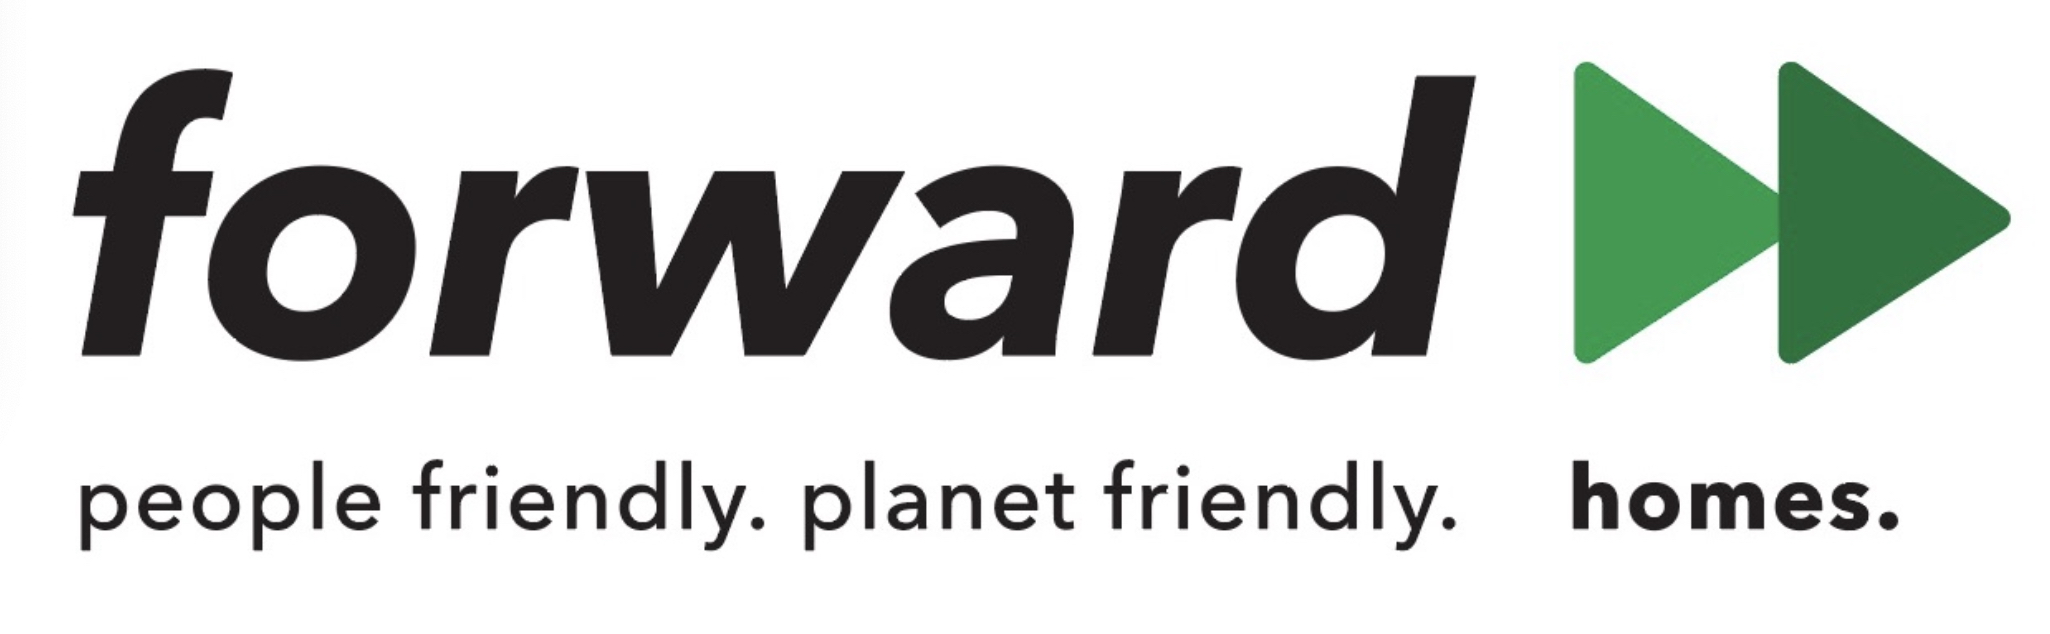 Forward Home Building company logo